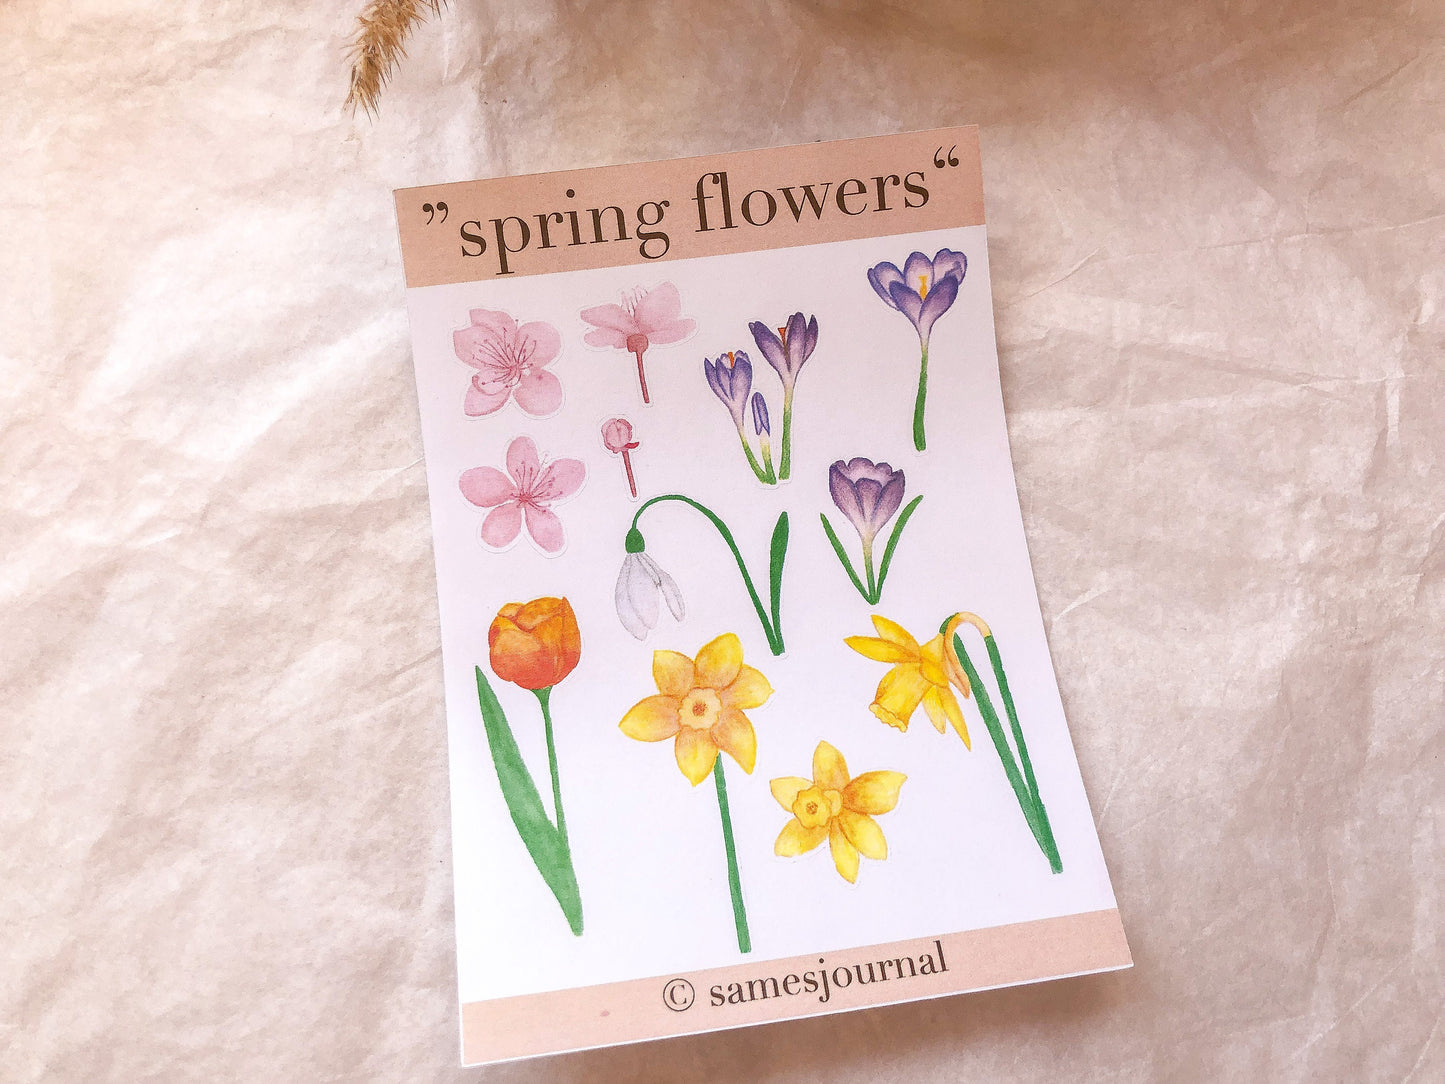 Frühlingsblume, Blüten, Frühling, Stickersheet, Sticker, Aufkleber, Narzisse, Tulpe - samesjournal